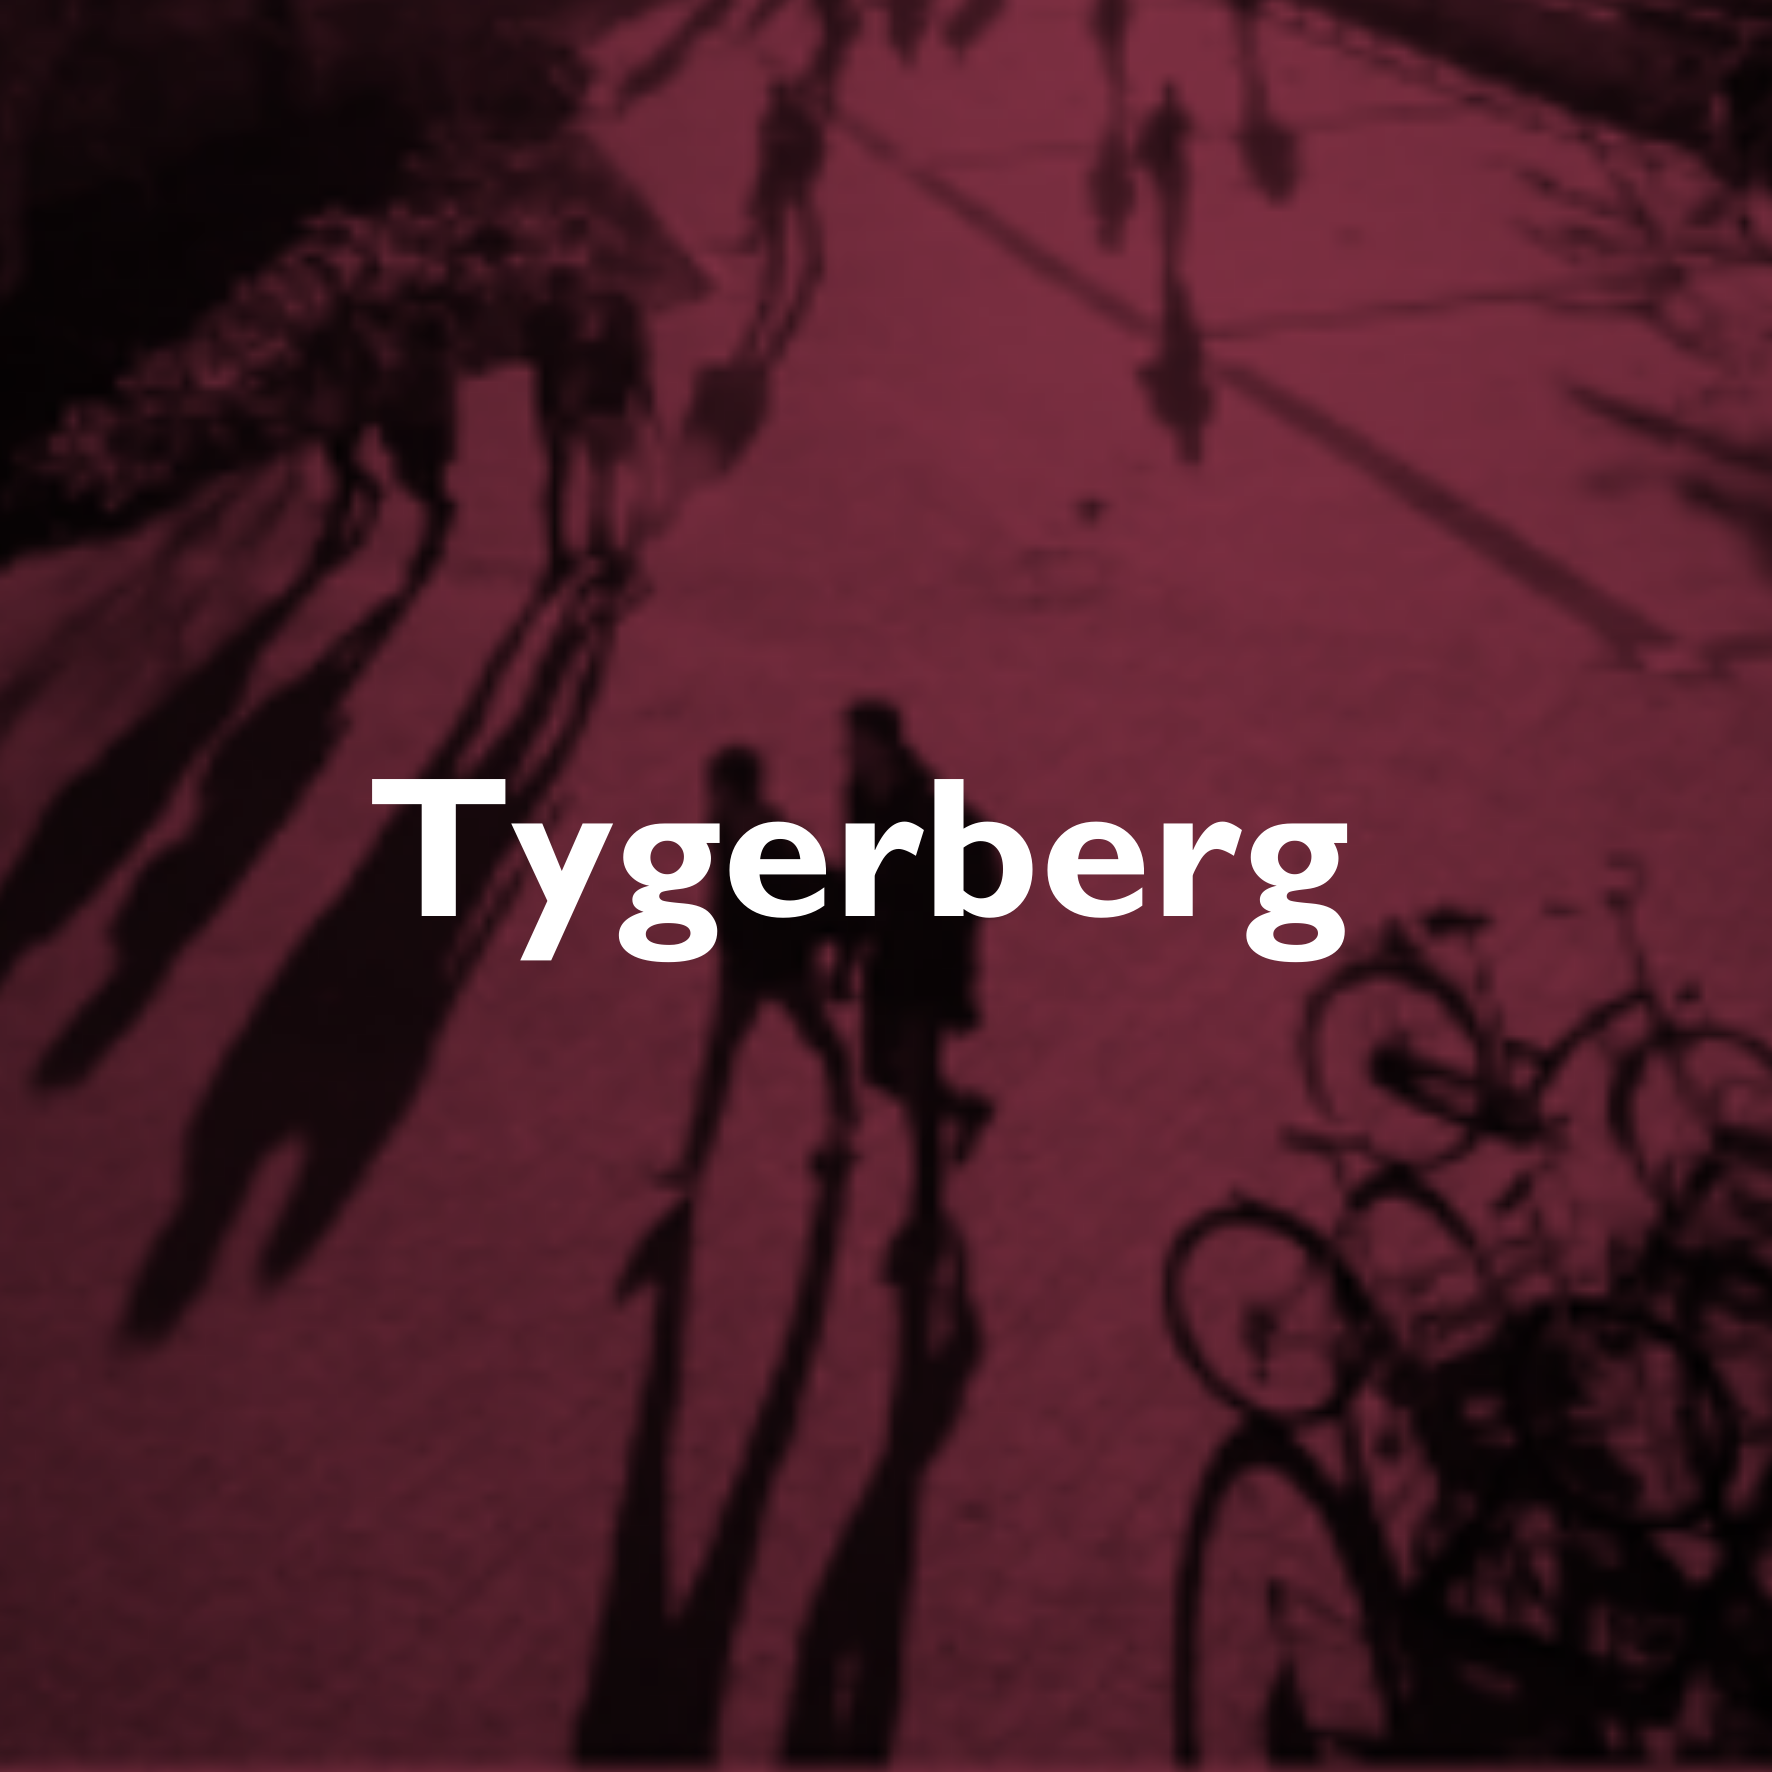 Tygerberg Elections.png